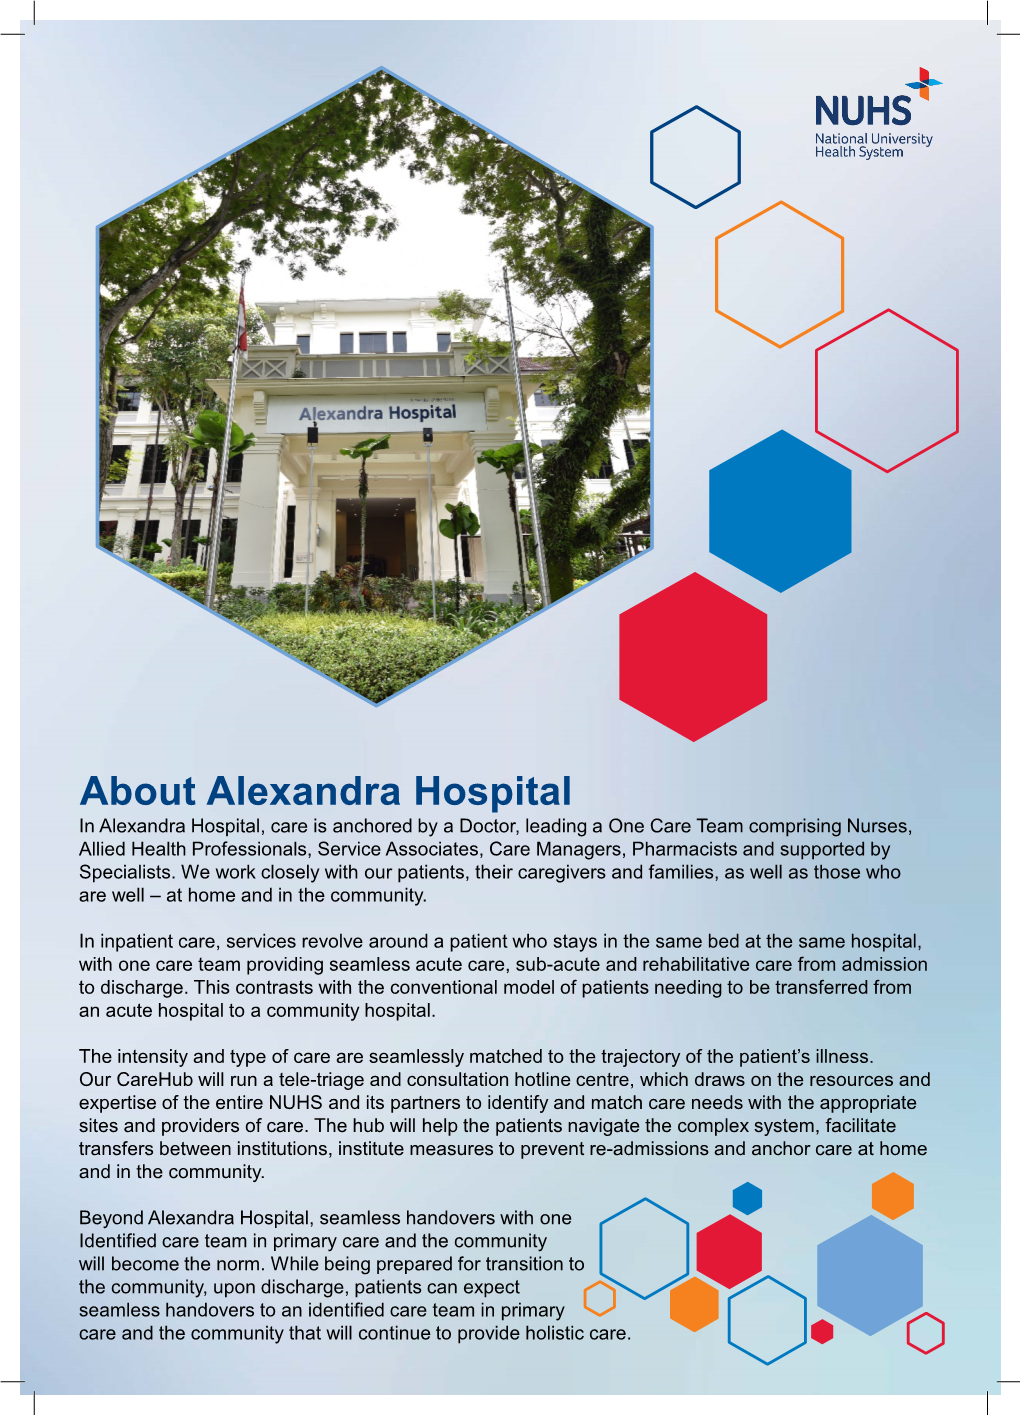 About Alexandra Hospital